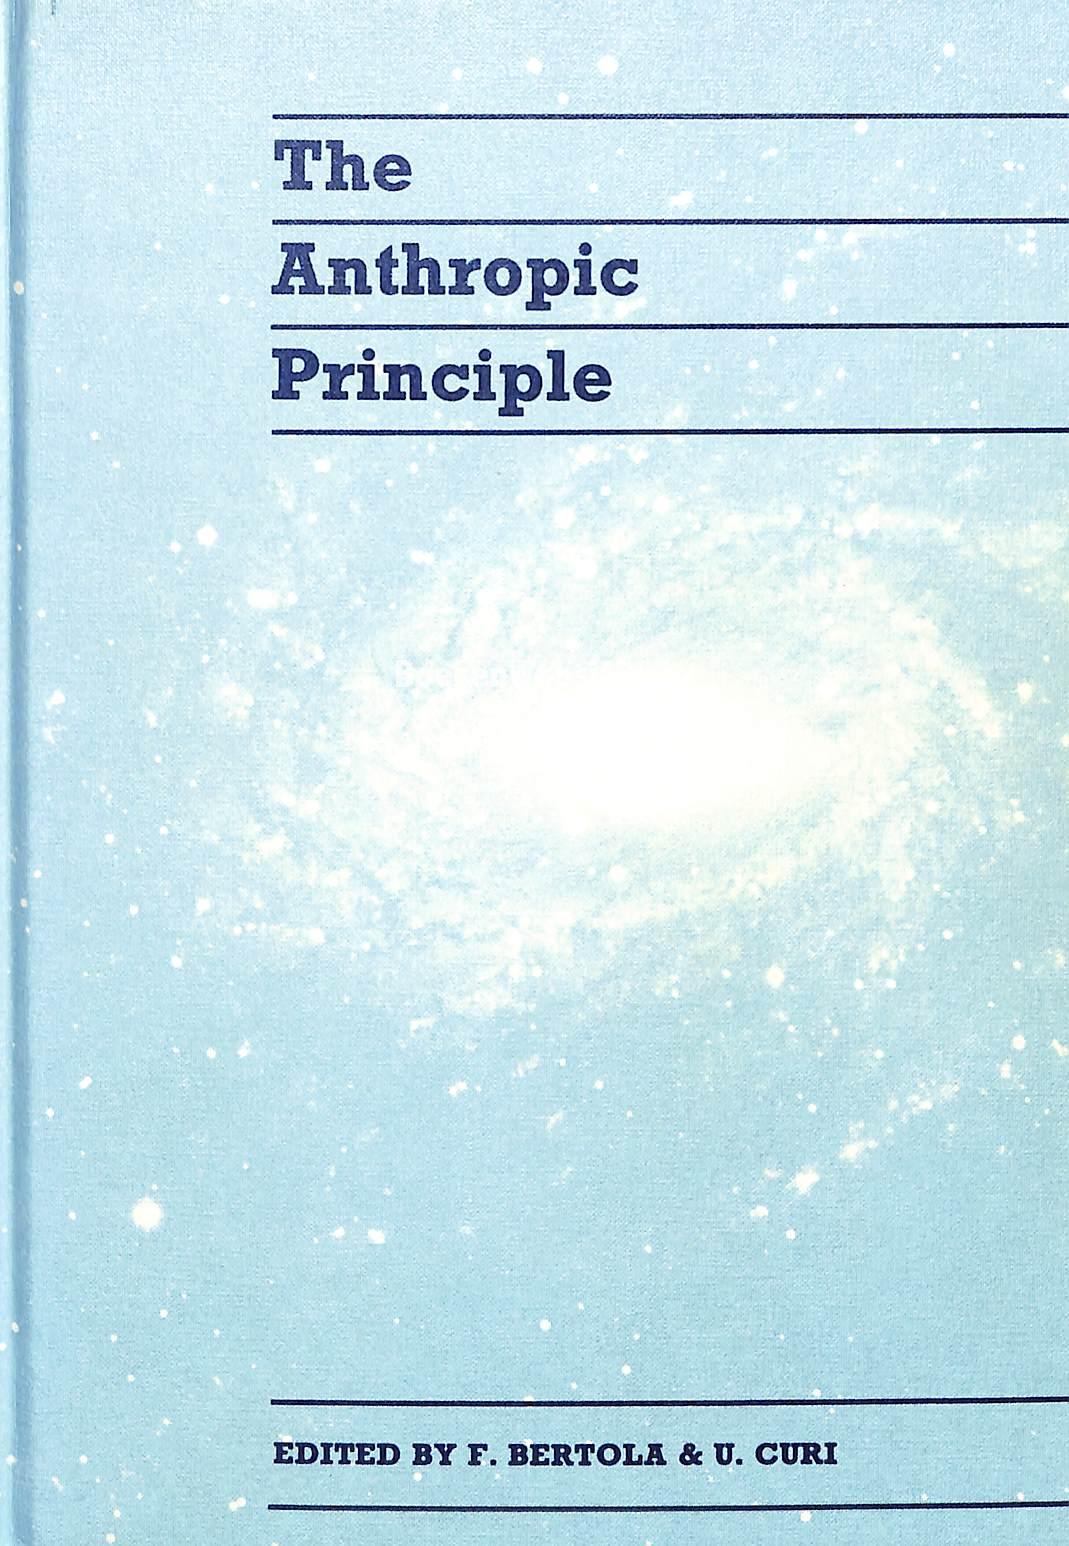 anthropic principle definition